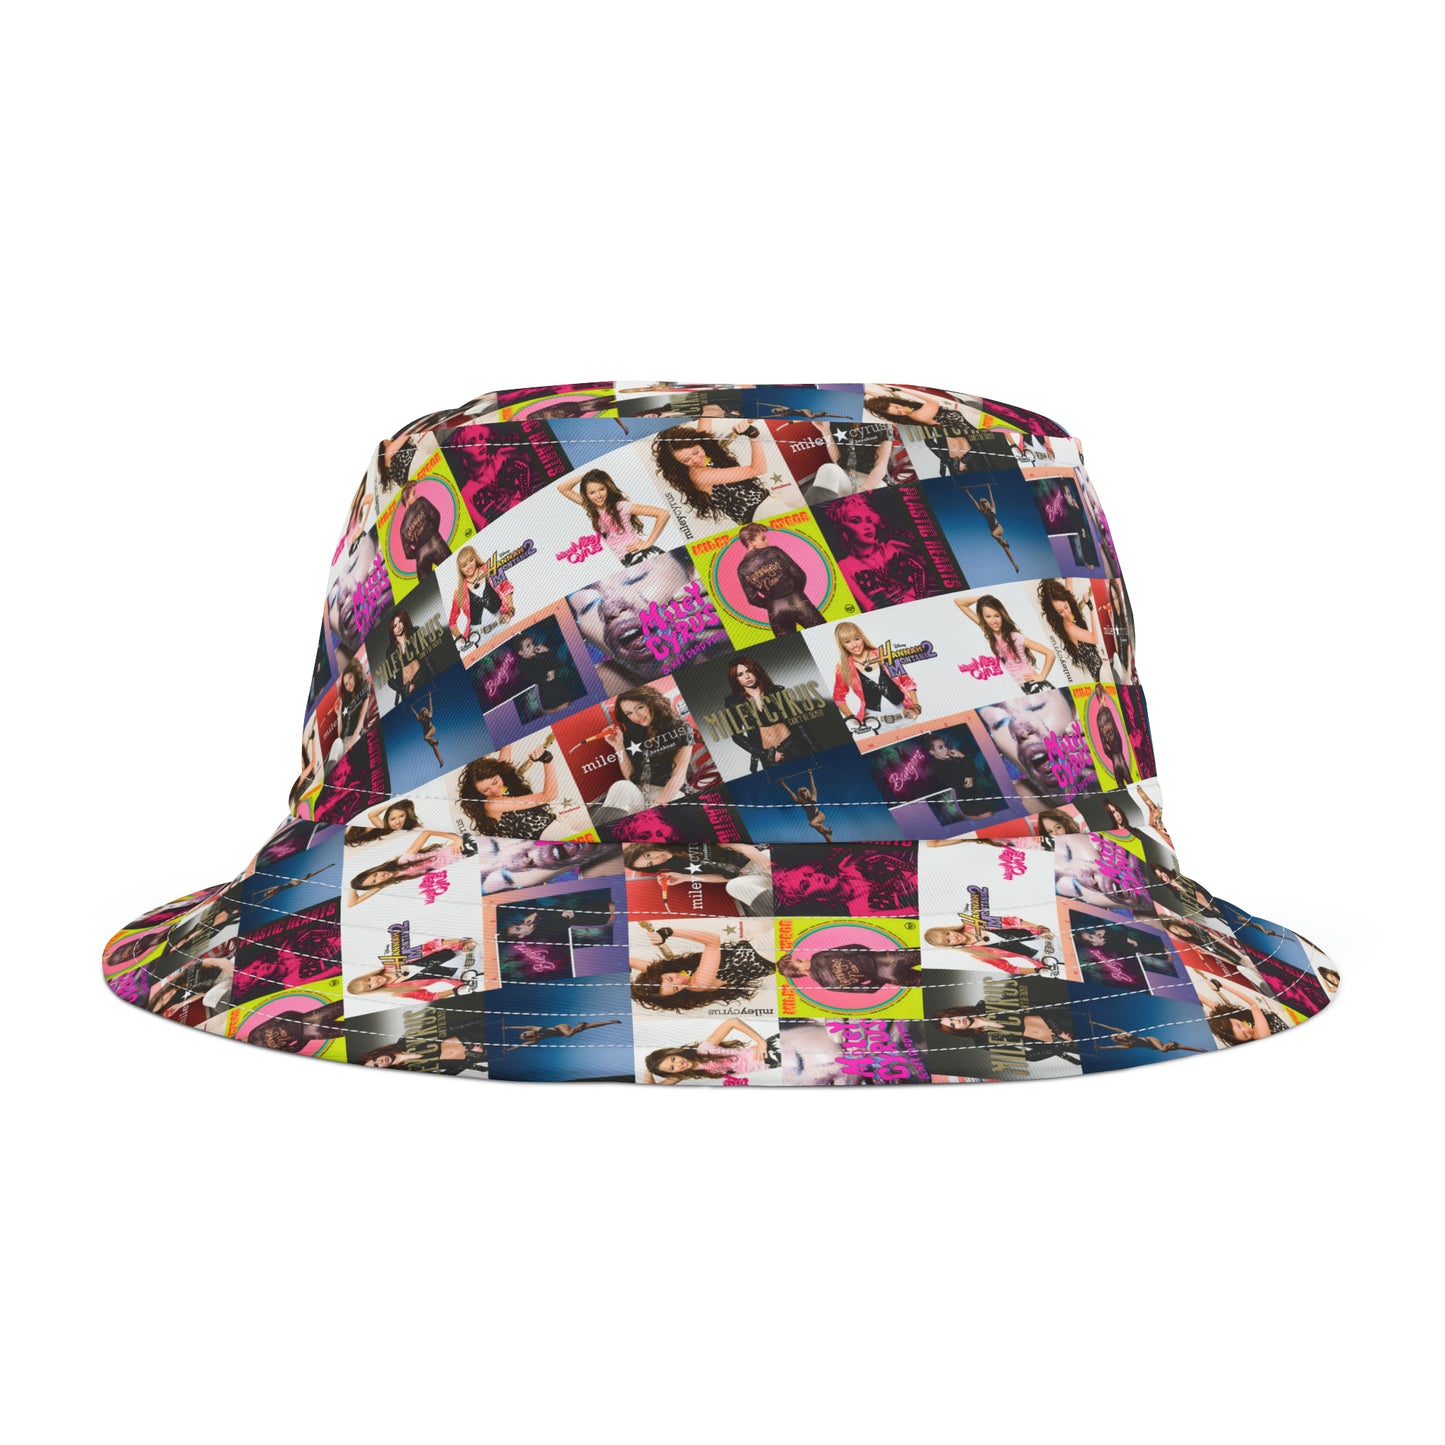 Miley Cyrus Album Cover Collage Bucket Hat